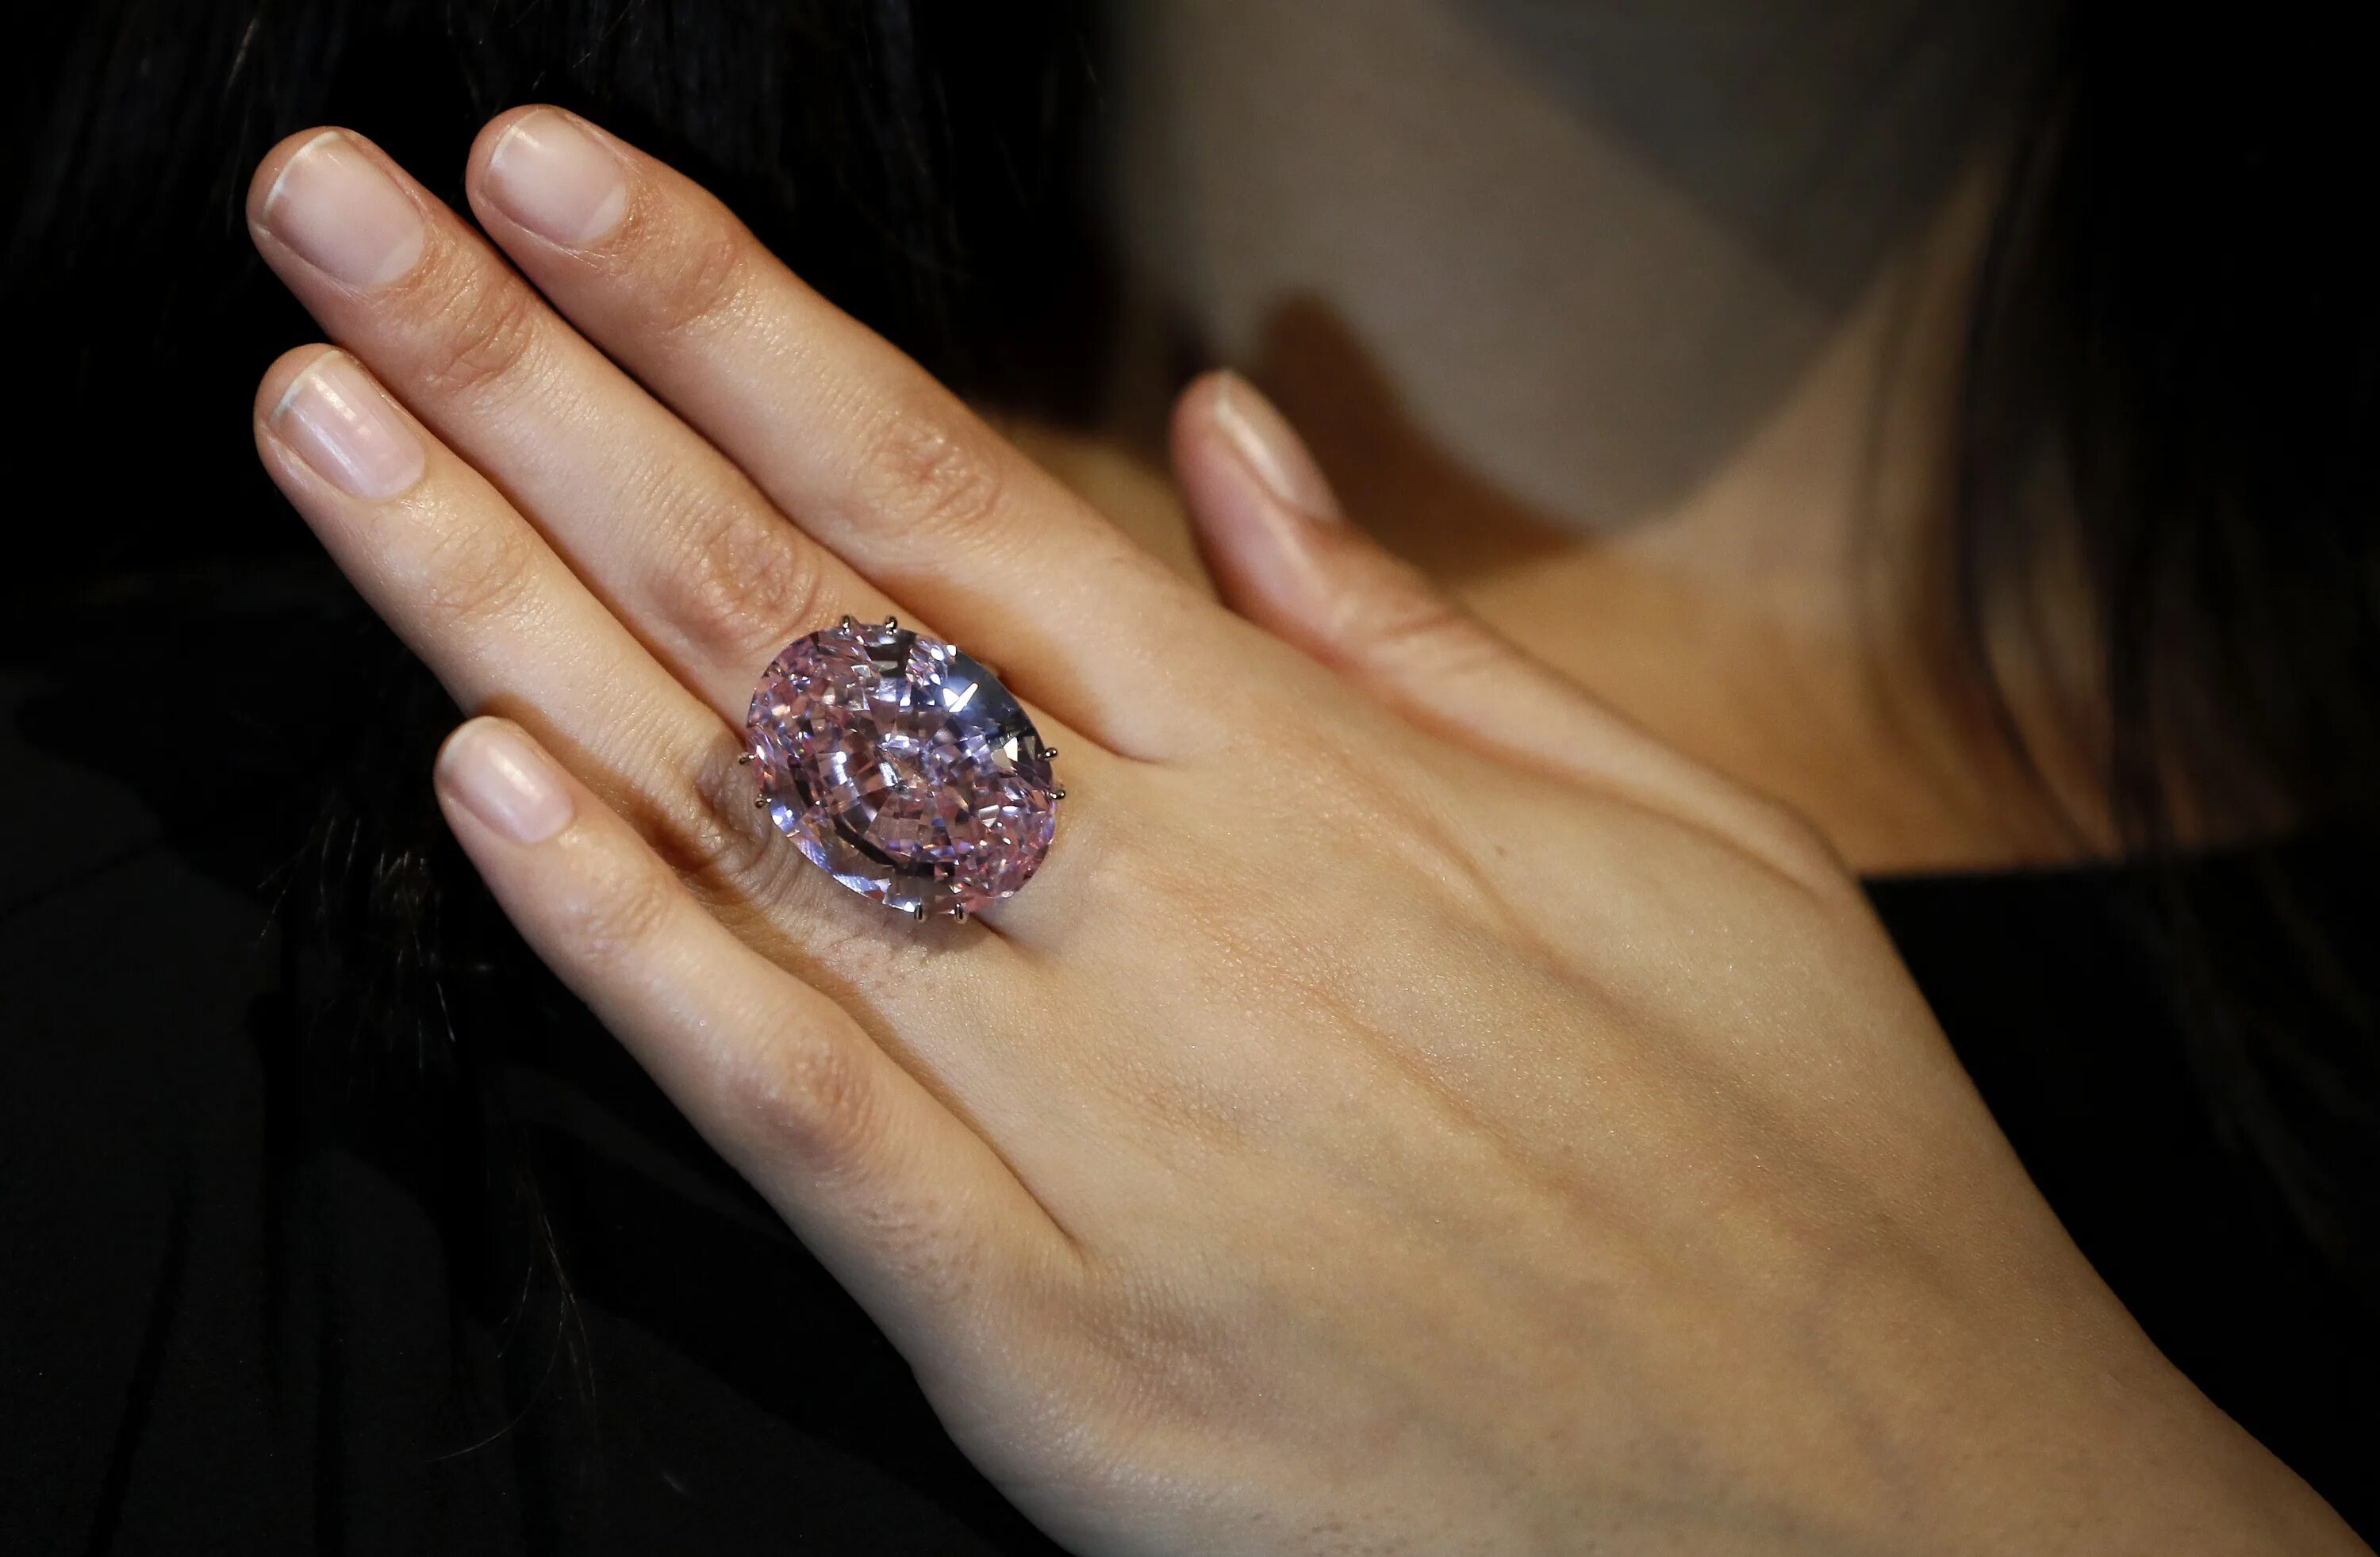 6 карат. Бриллианта Pink Star весом 59,6 карата.. Кольцо Graff Pink Diamond.